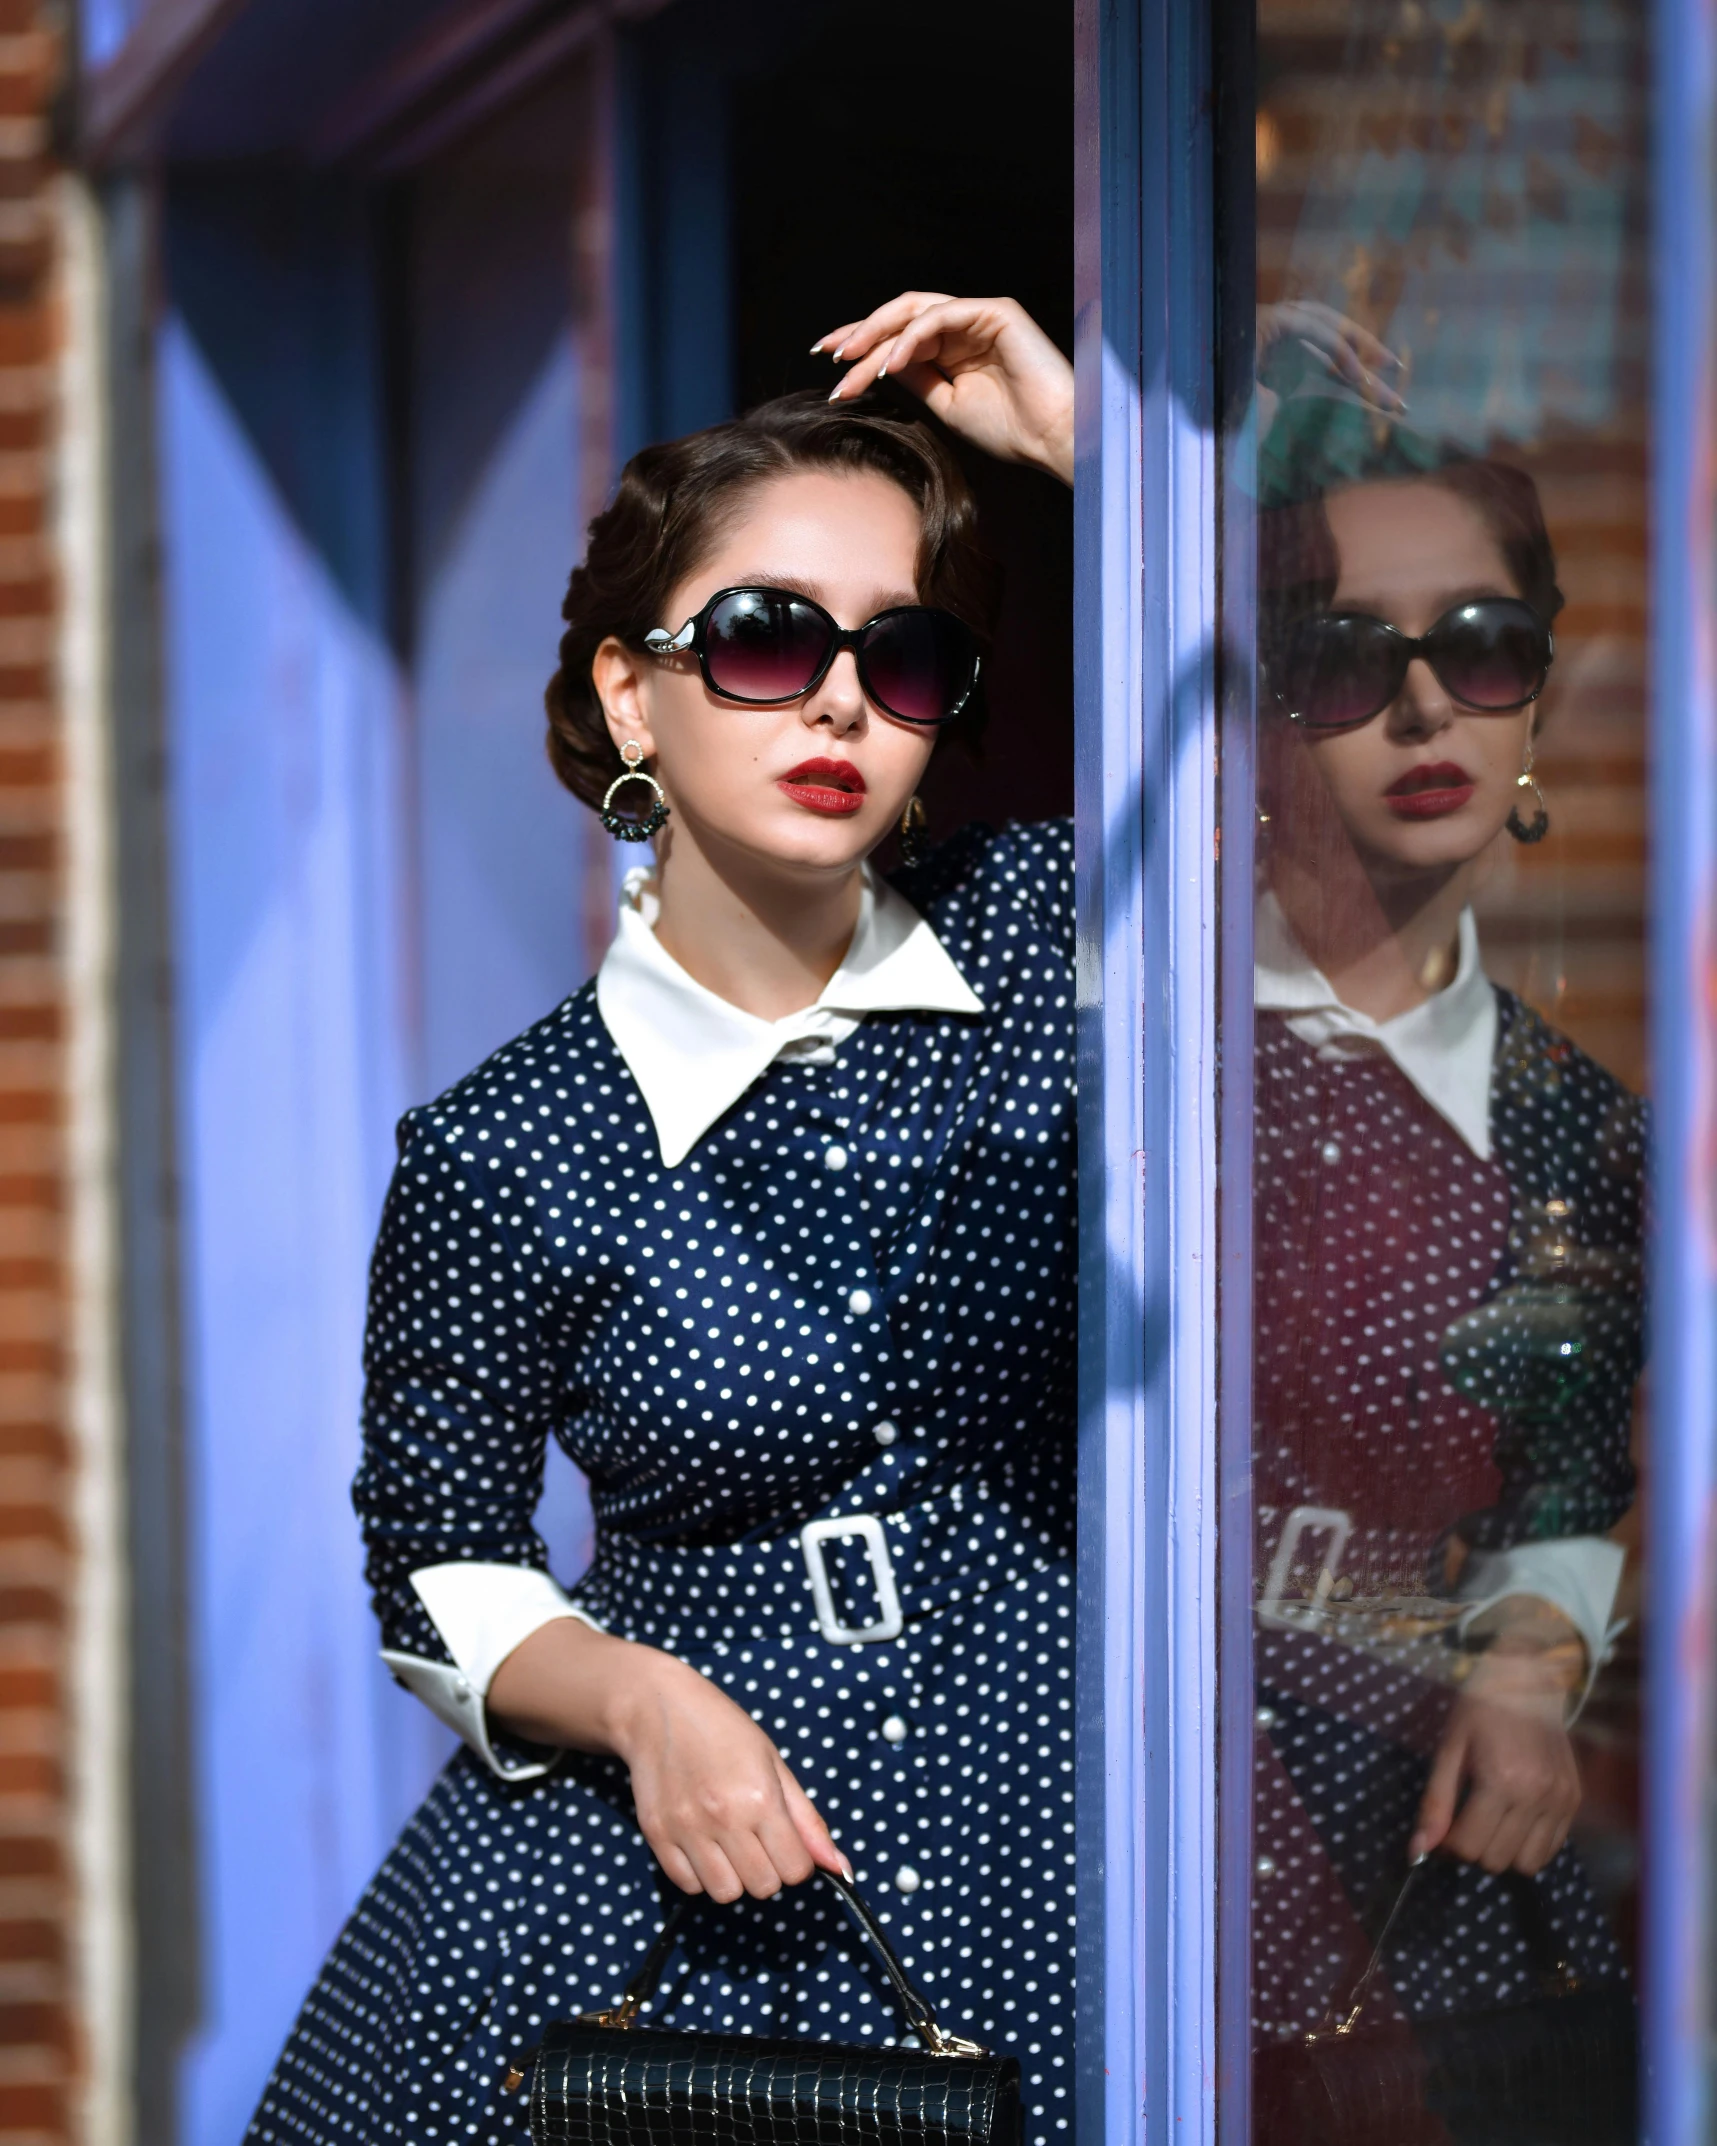 a woman wearing sunglasses and a polka dot dress